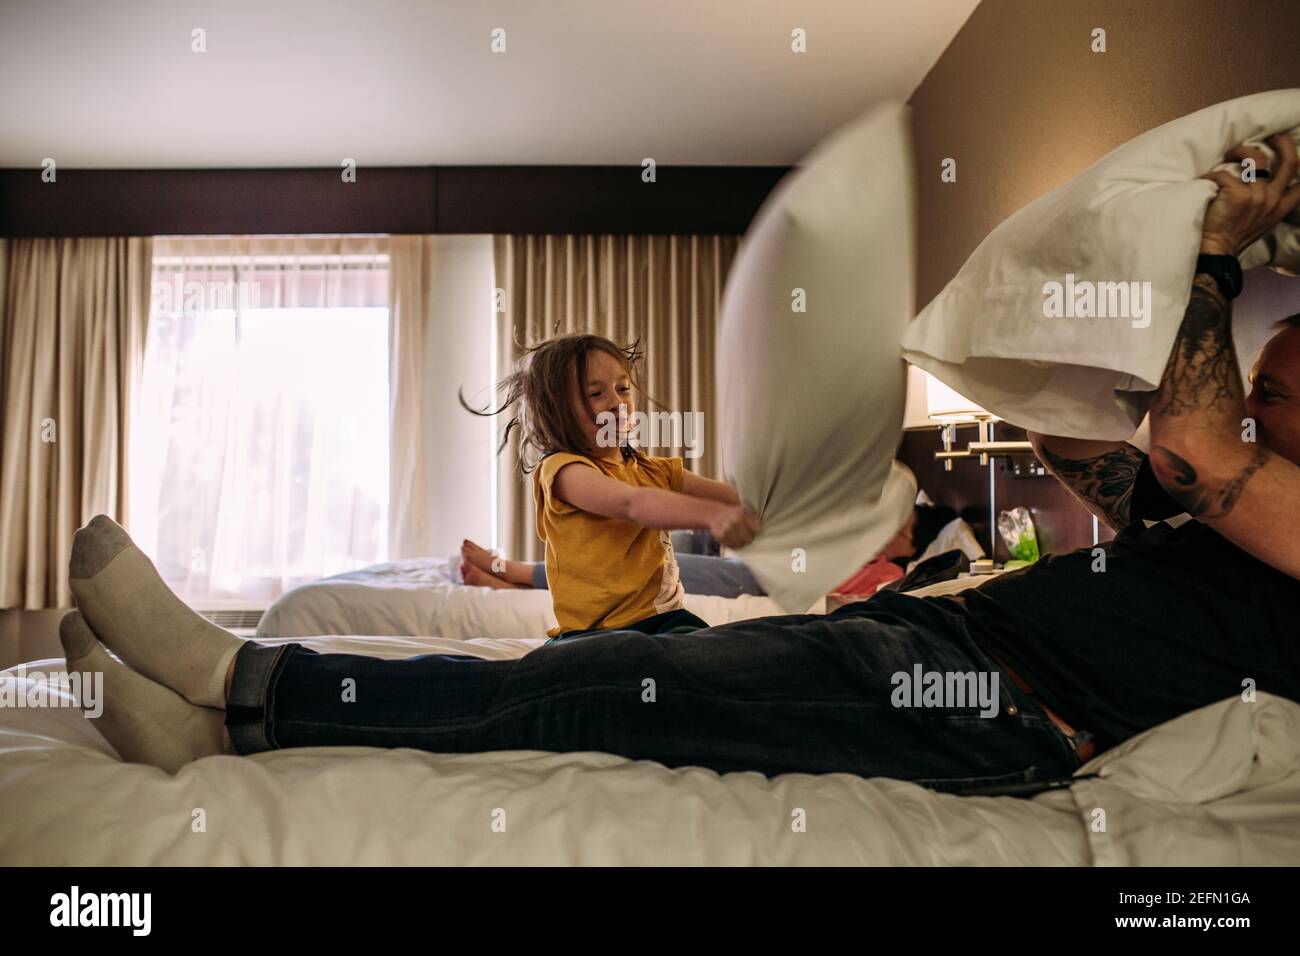 https://c8.alamy.com/comp/2EFN1GA/young-girl-and-dad-having-a-pillow-fight-in-a-hotel-room-2EFN1GA.jpg